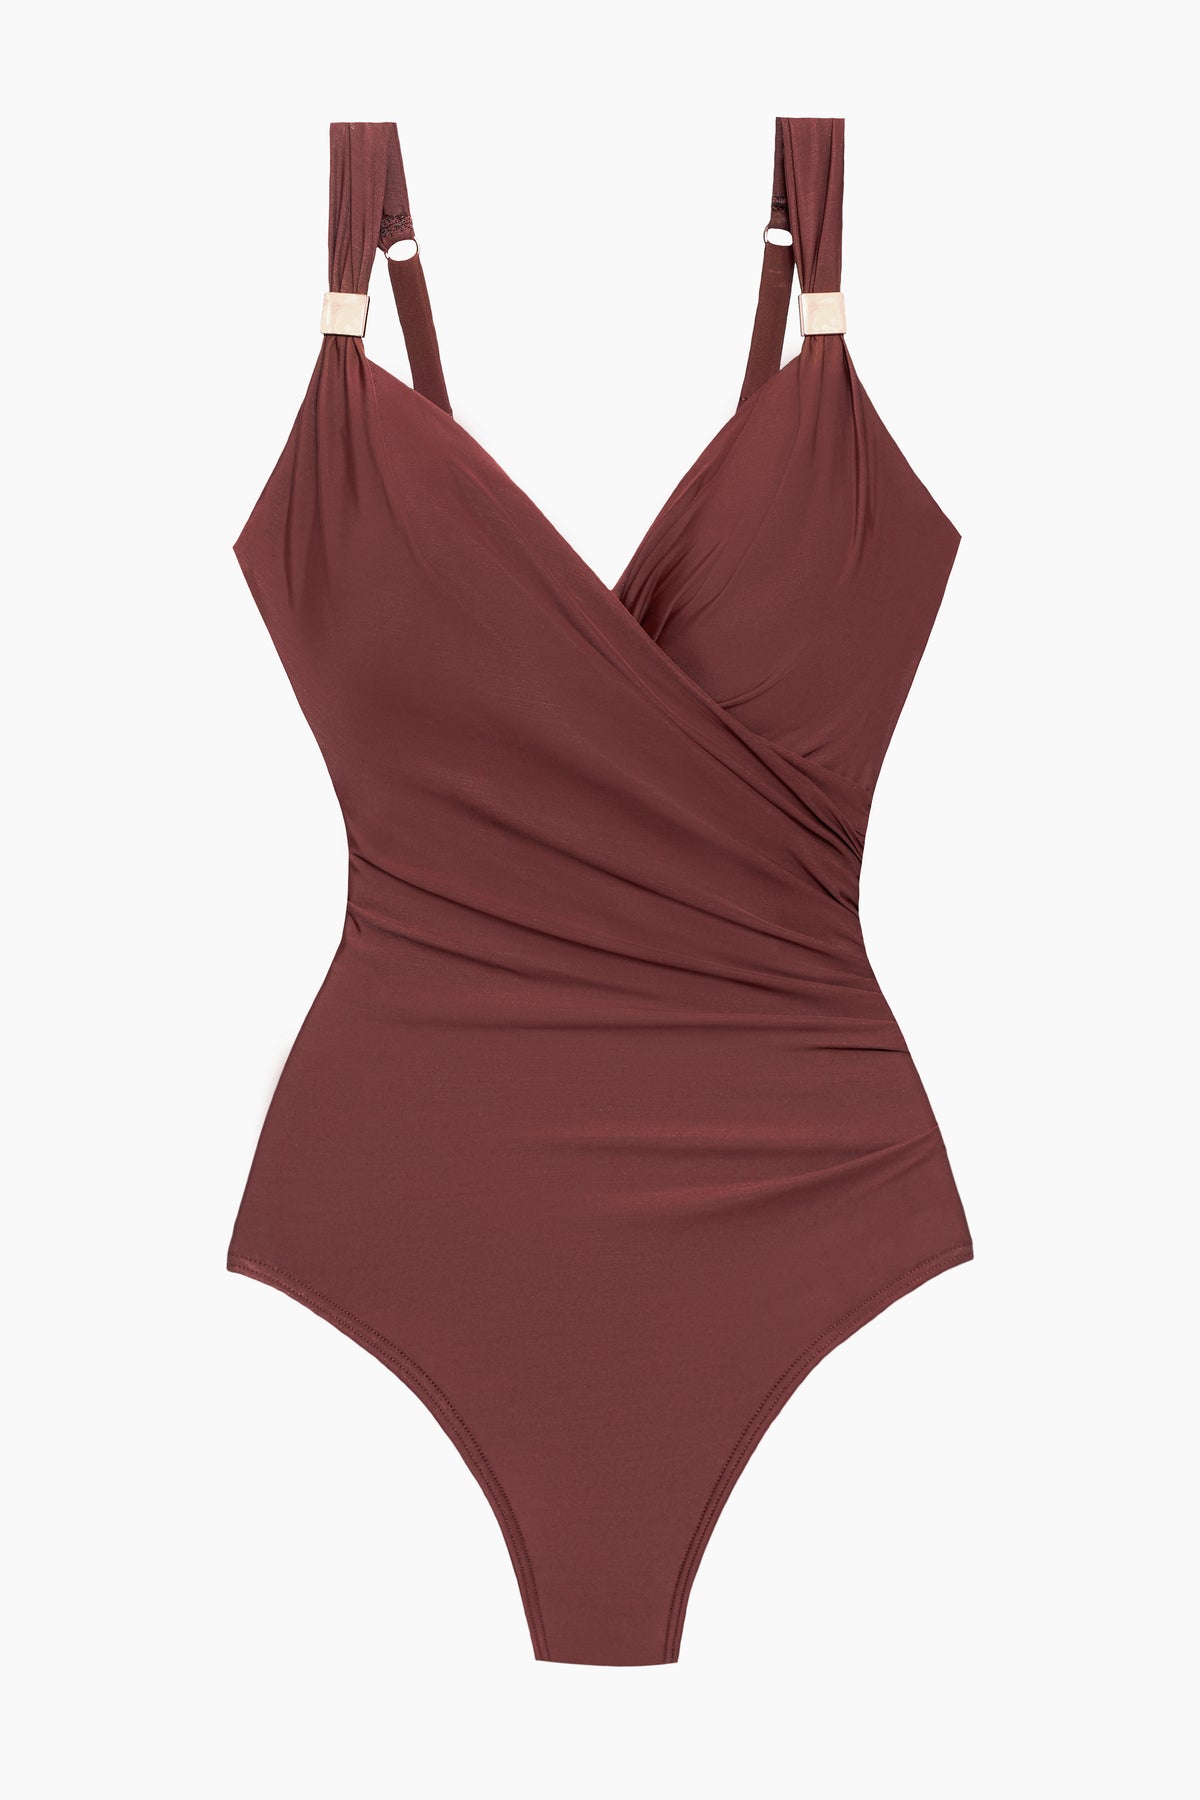 Miraclesuit Women's Swimwear Sublime Feline Siren Scoop Neckline Underwire  Bra Full Bust Support Tankini Bathing Suit Top, Brown, 08